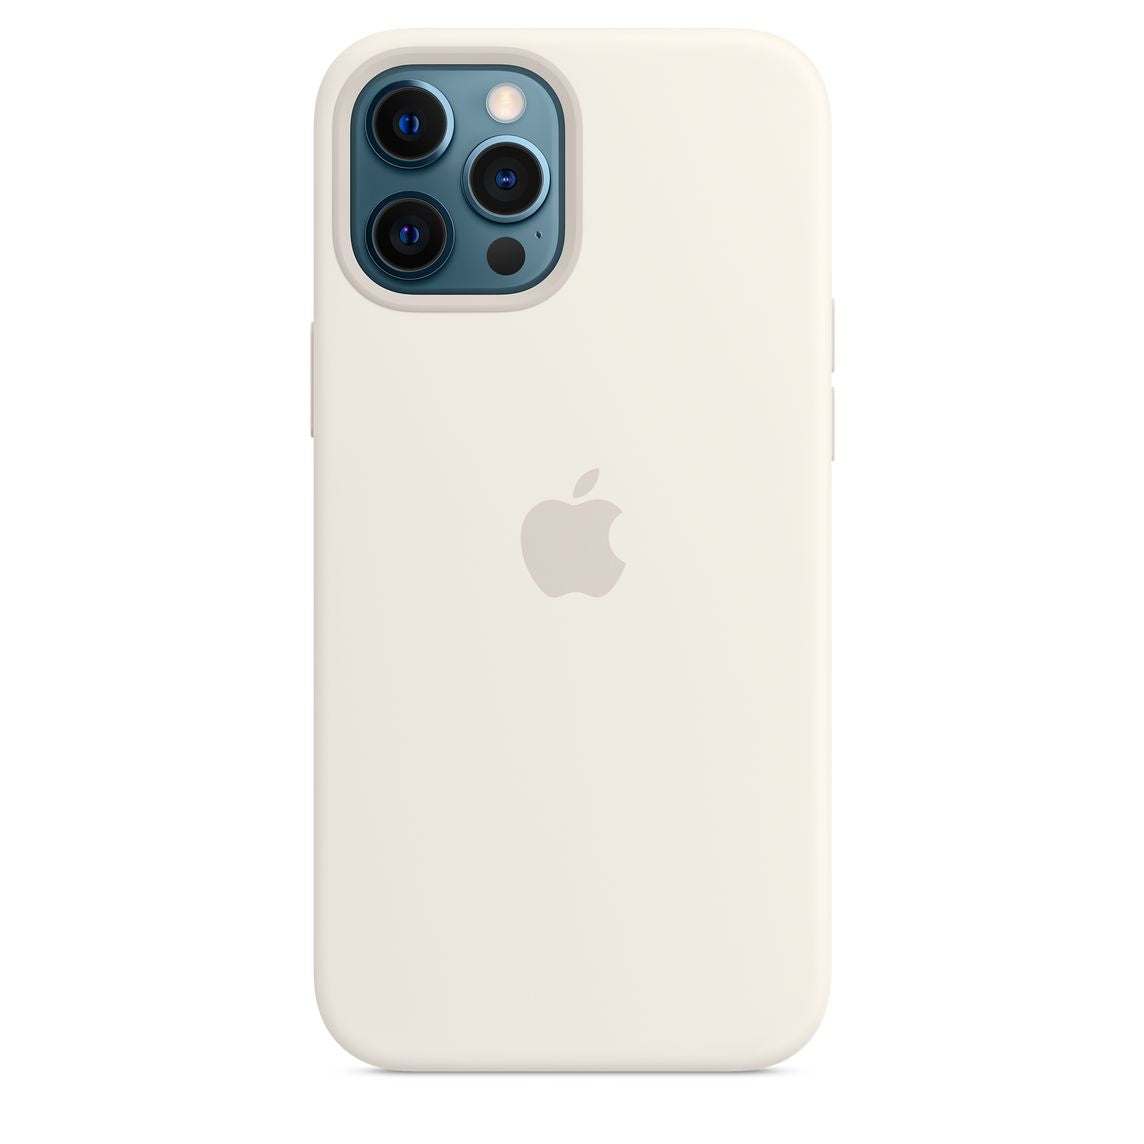 Carcasa silicona iPhone 12 pro max Blanco